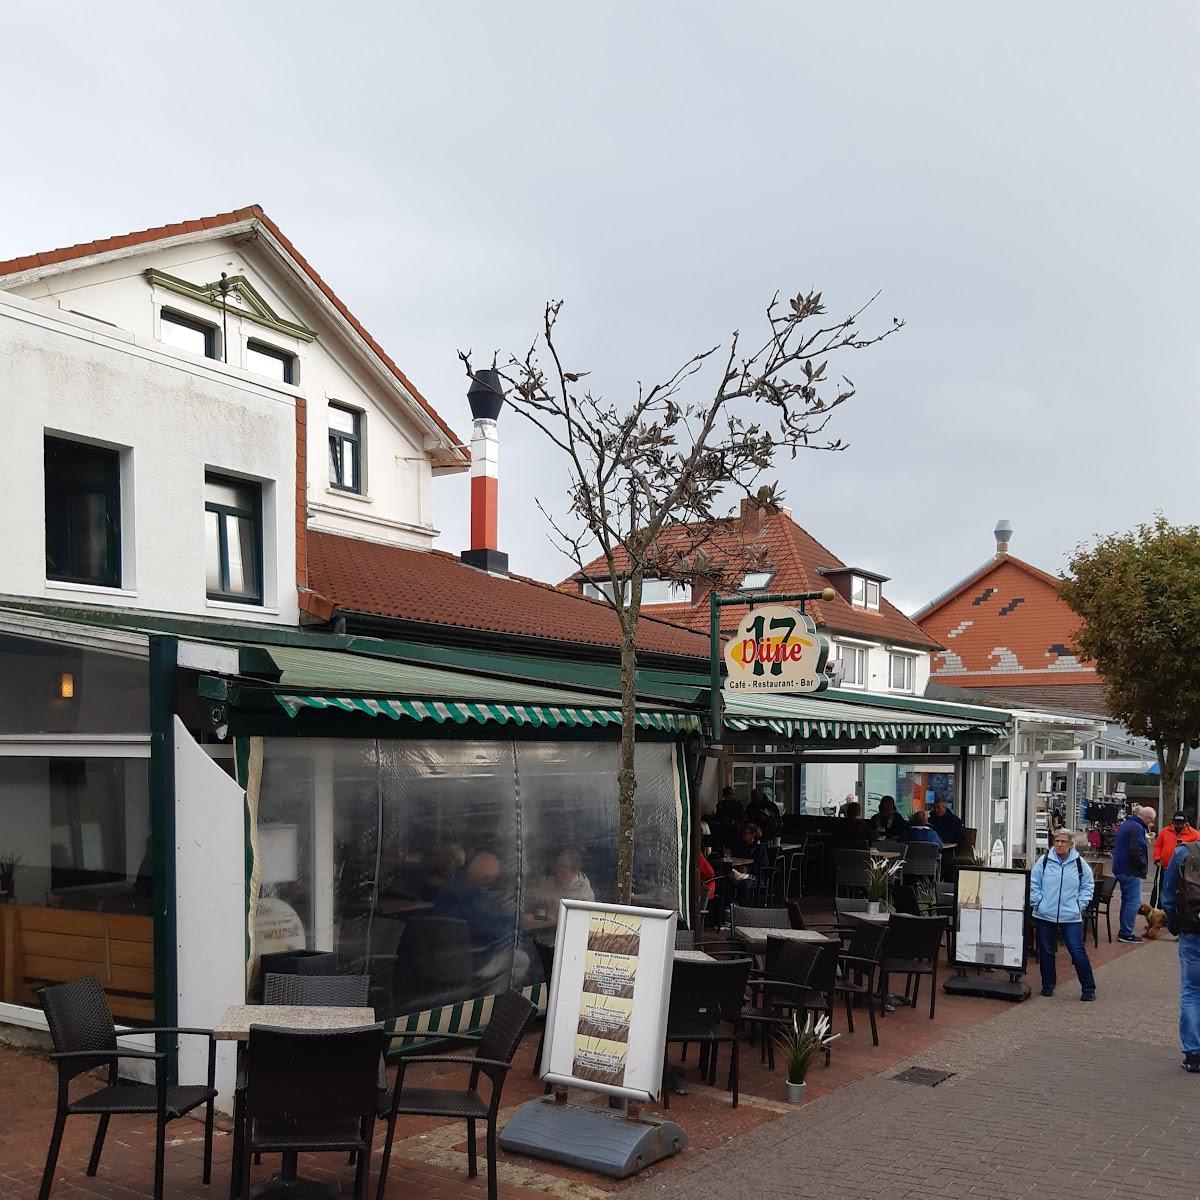 Restaurant "Gaststätte Düne 17" in Wangerooge